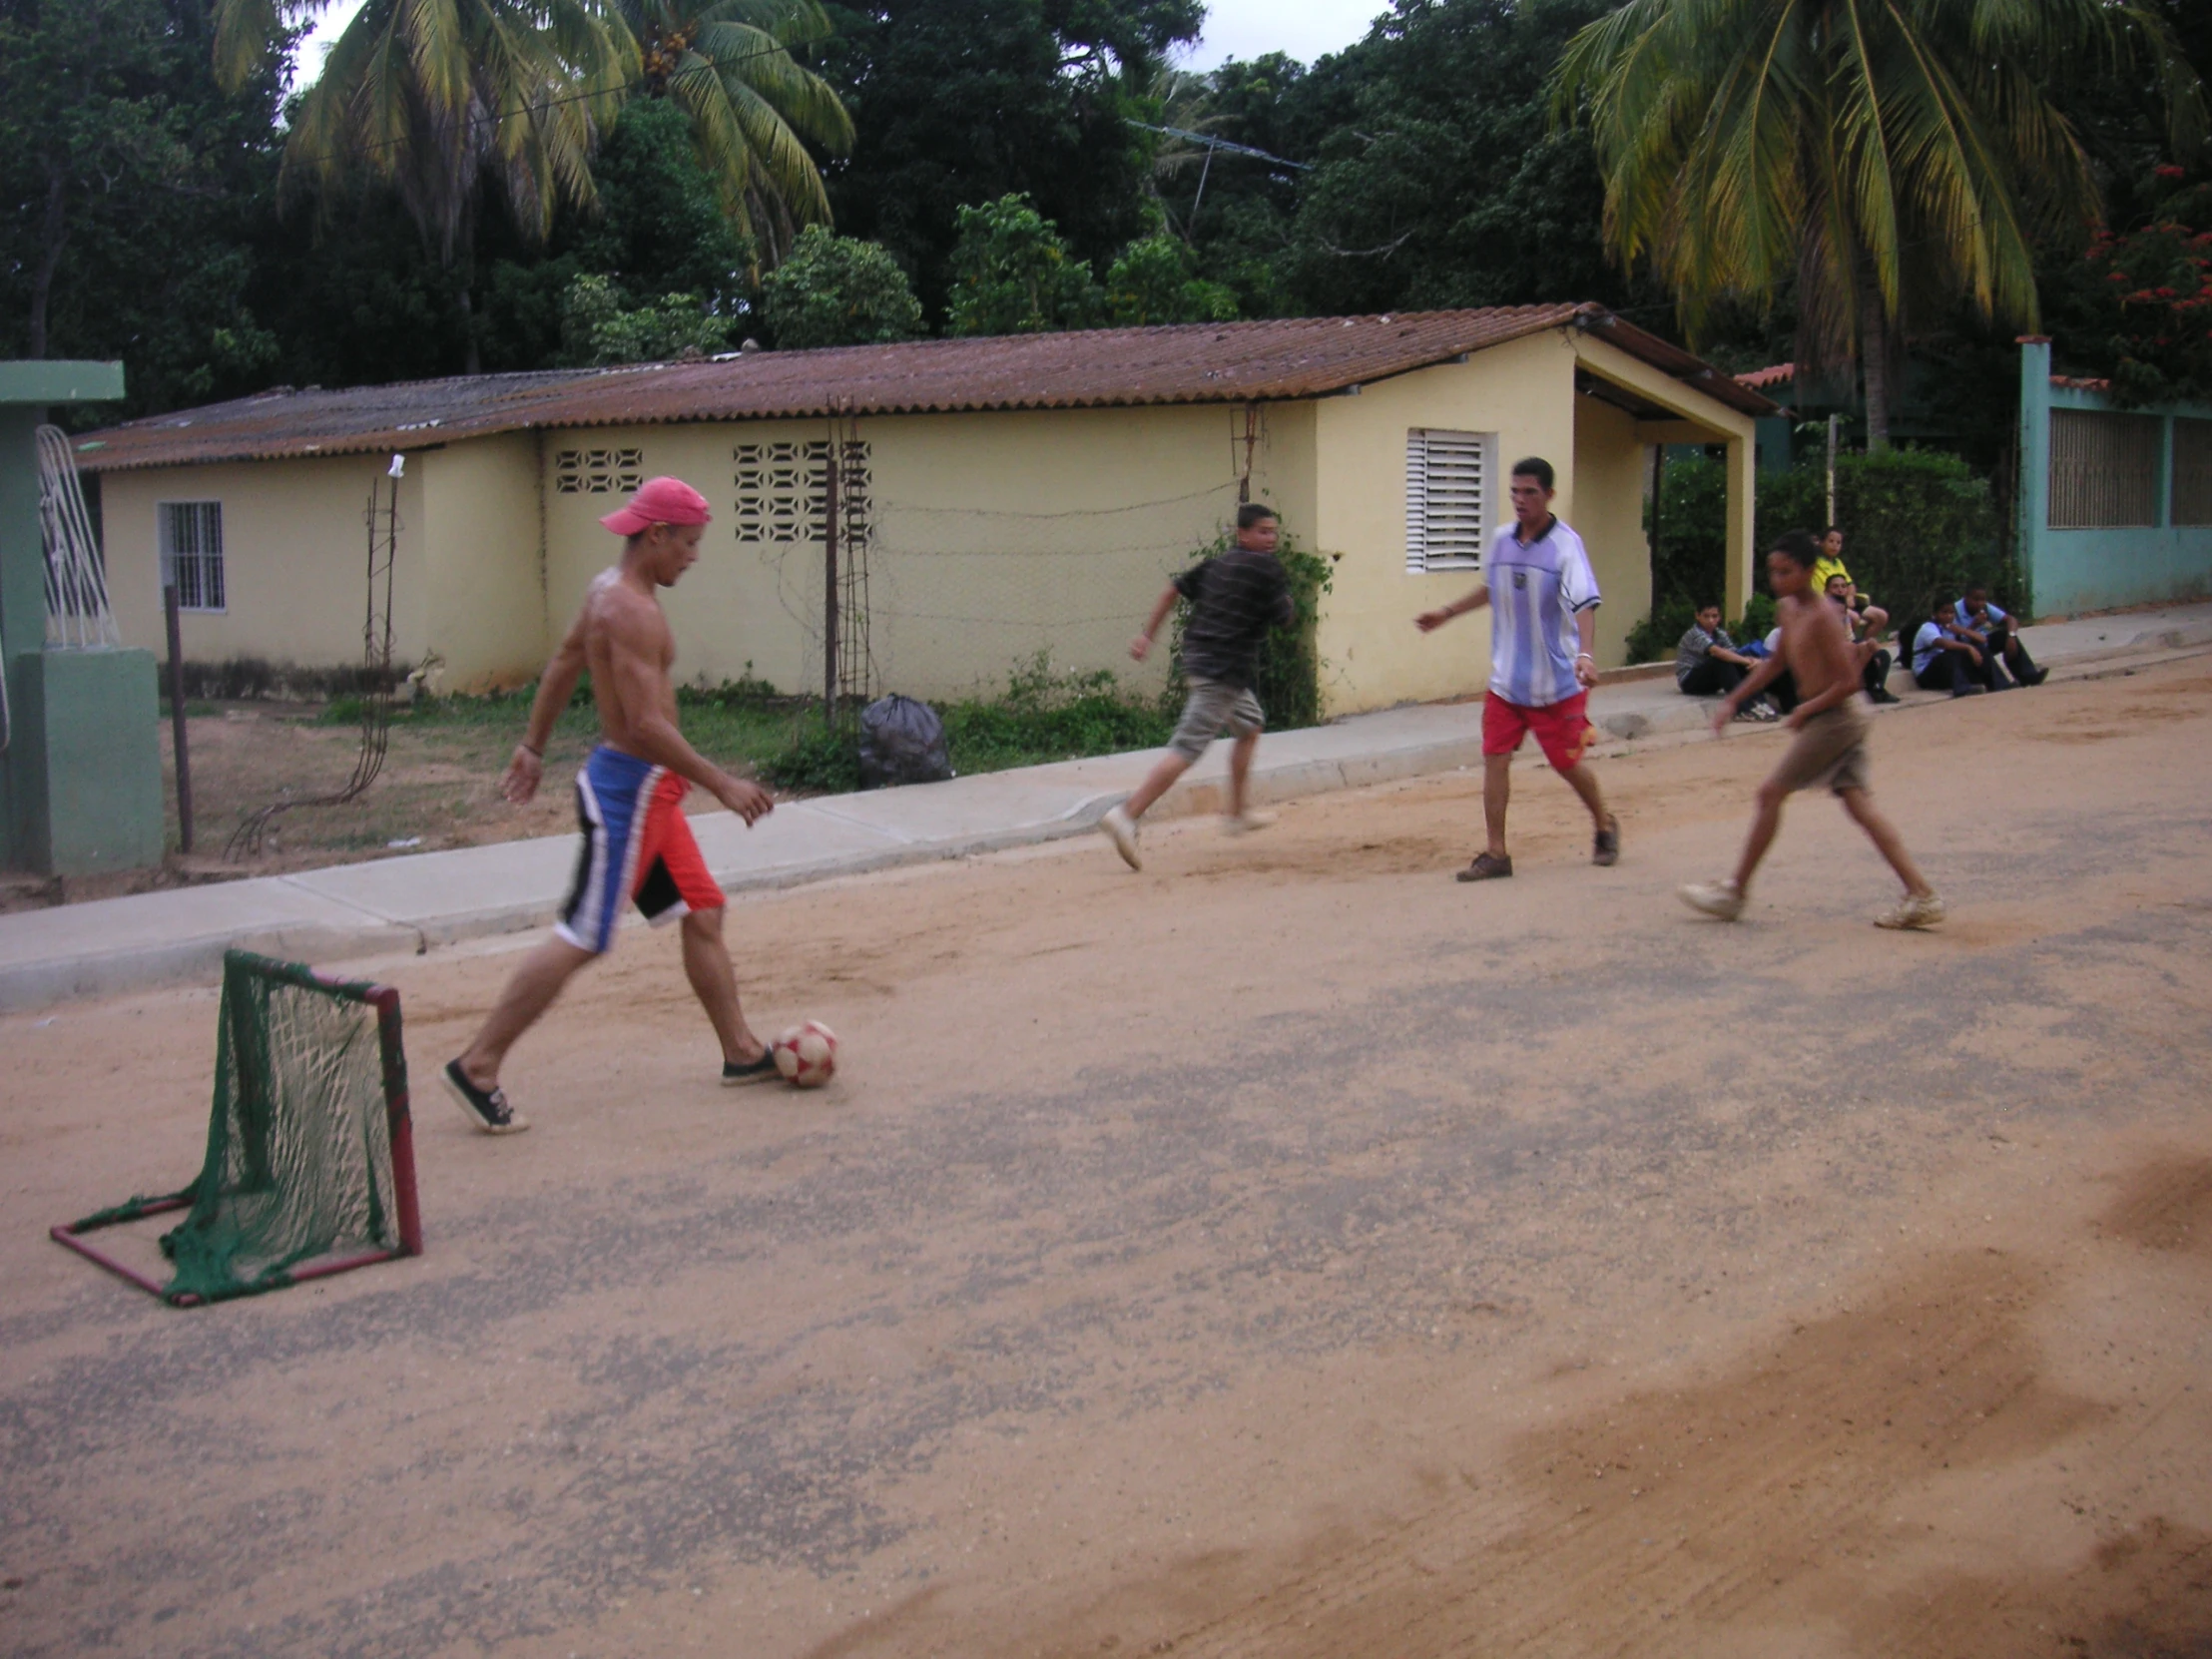 four boys playing ball on a sandy street